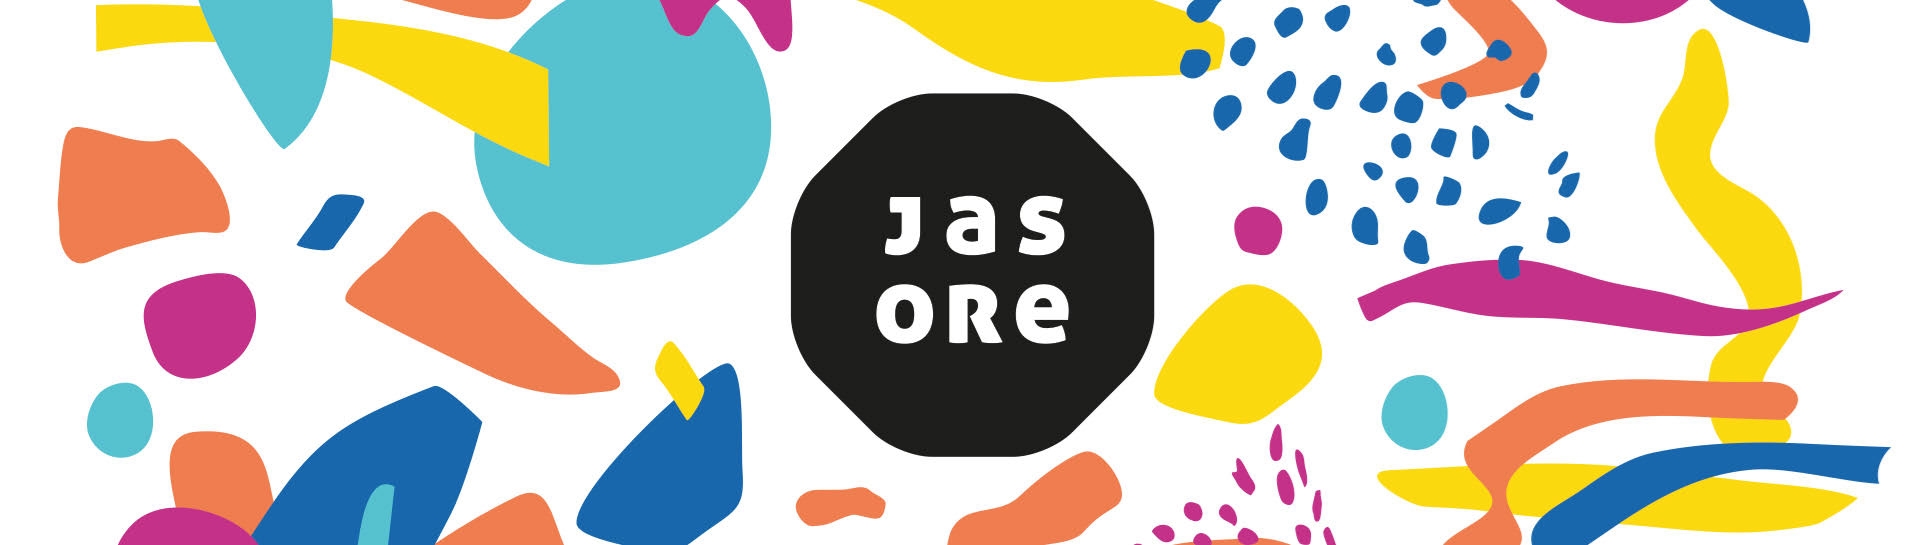 Jasore